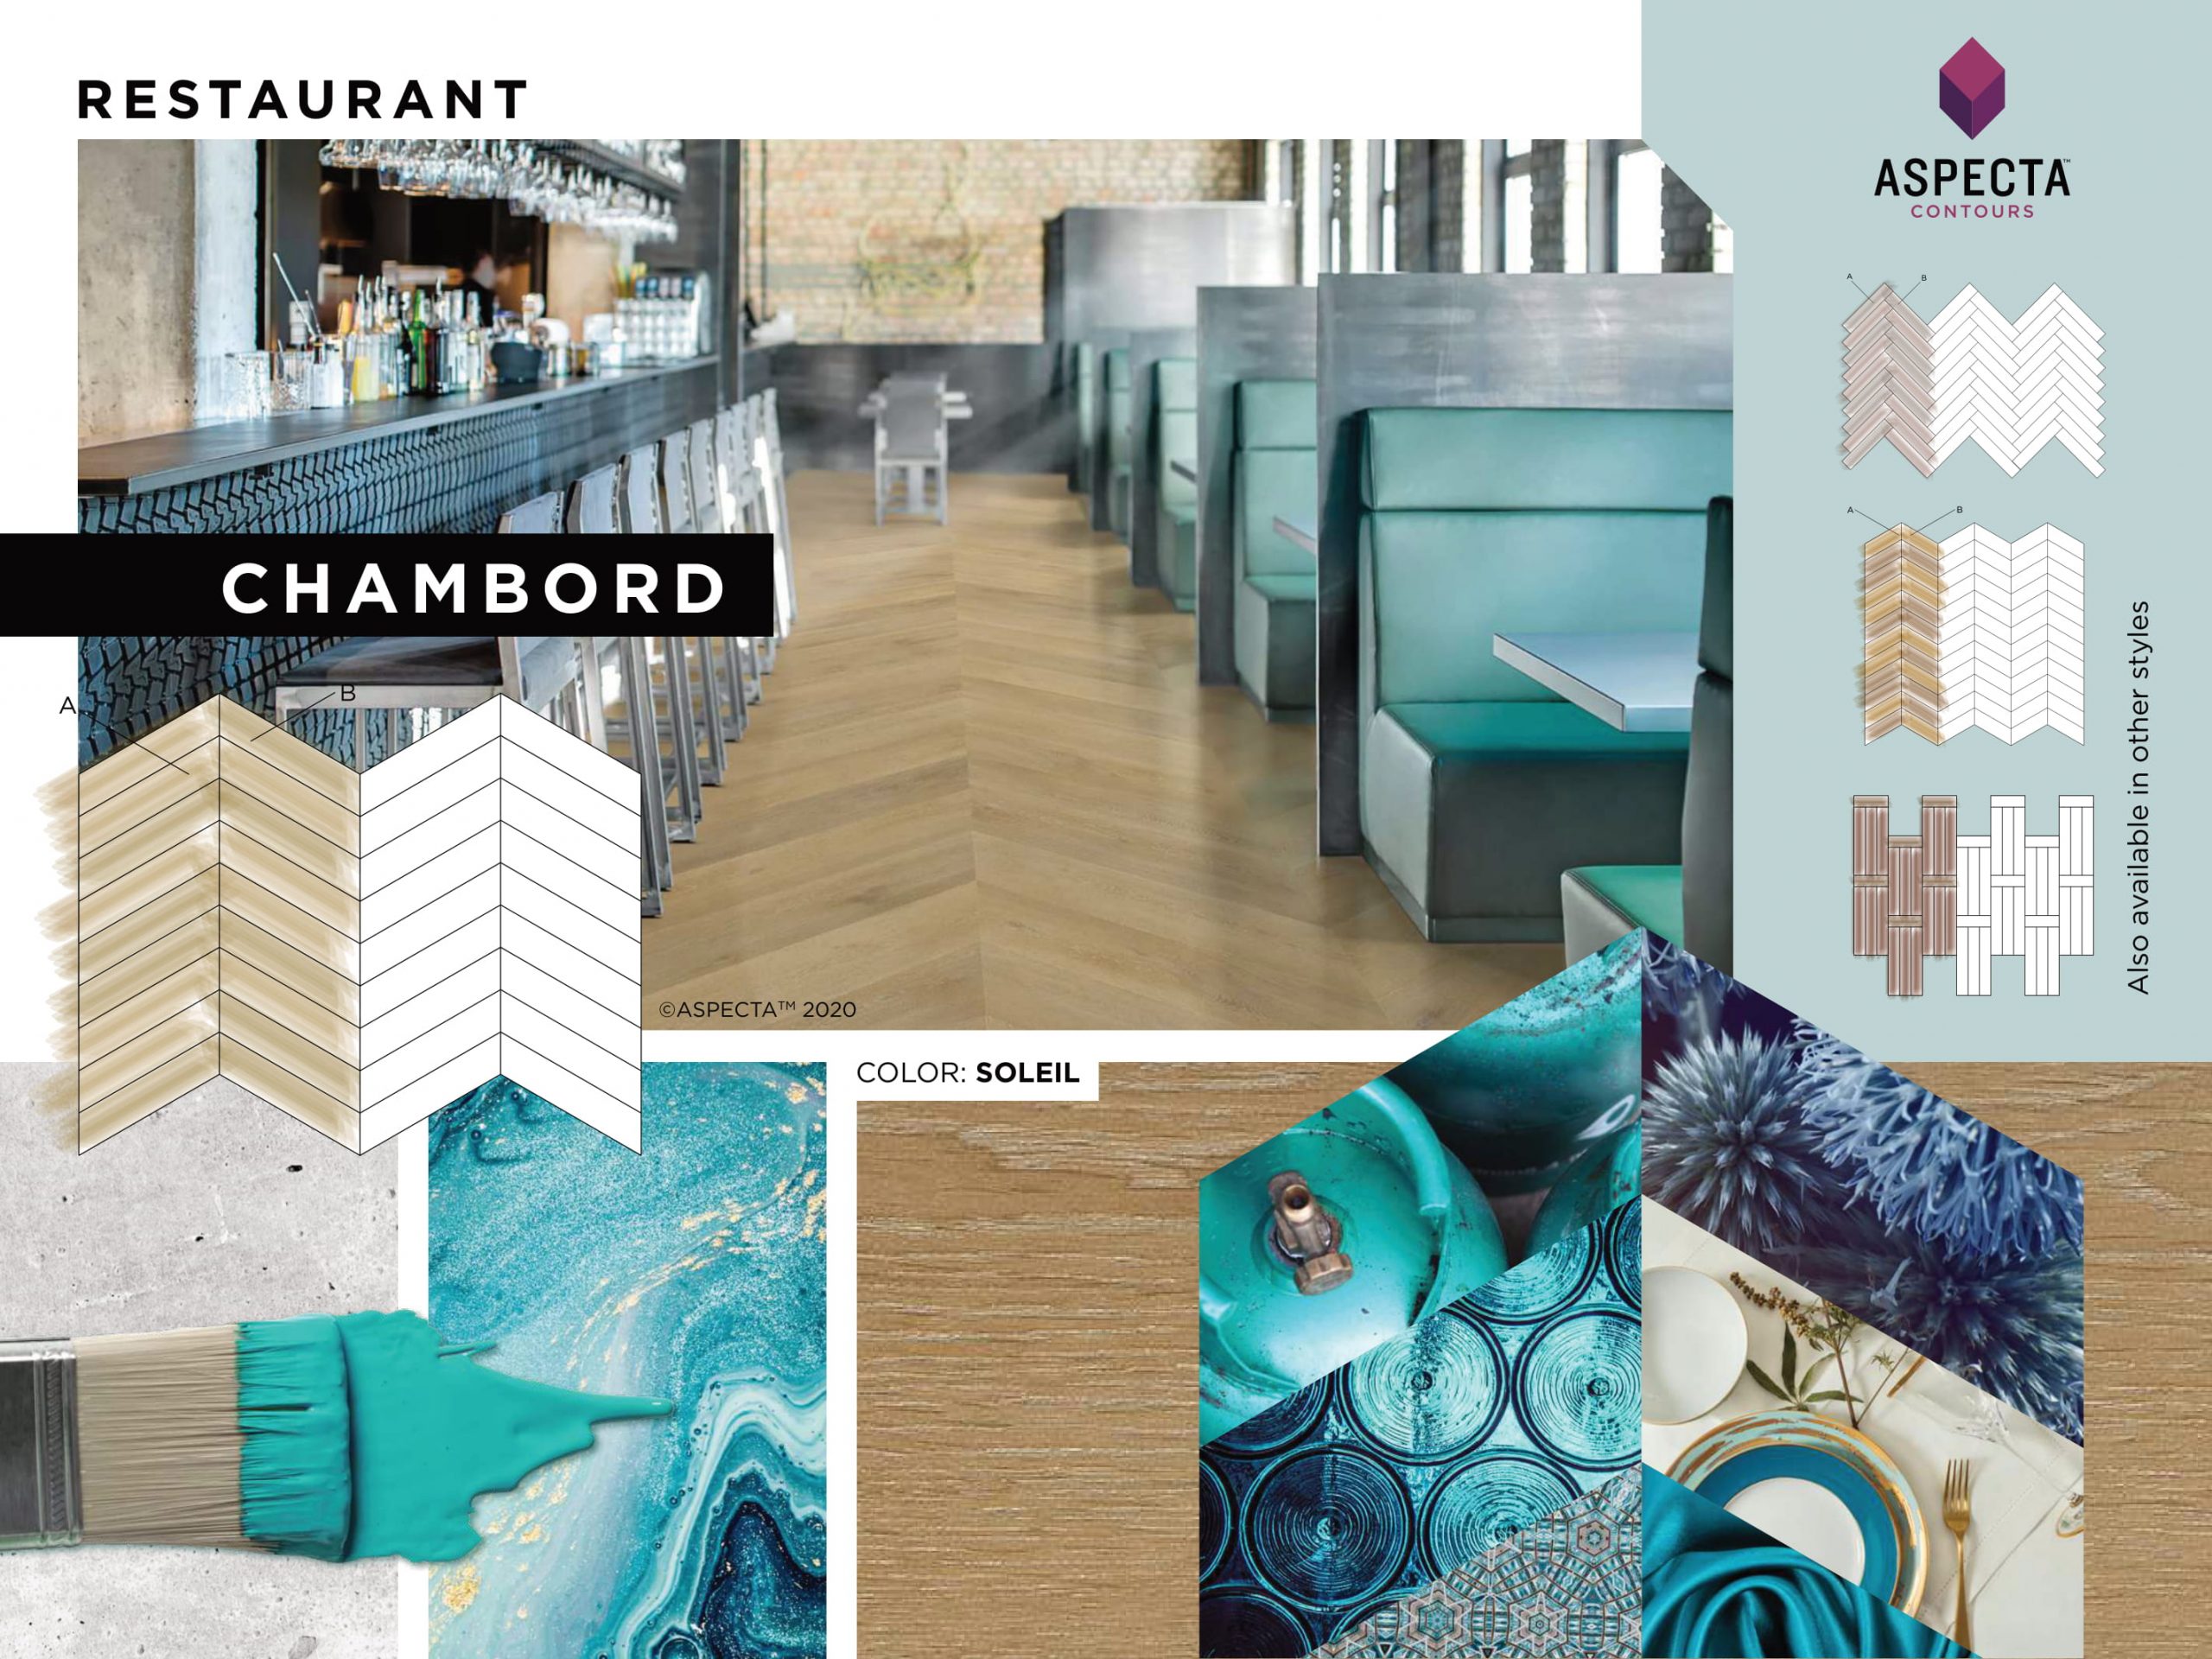 01_ASP_Contours_Chambord_Restaurant_Moodboard_web_03_2020-1